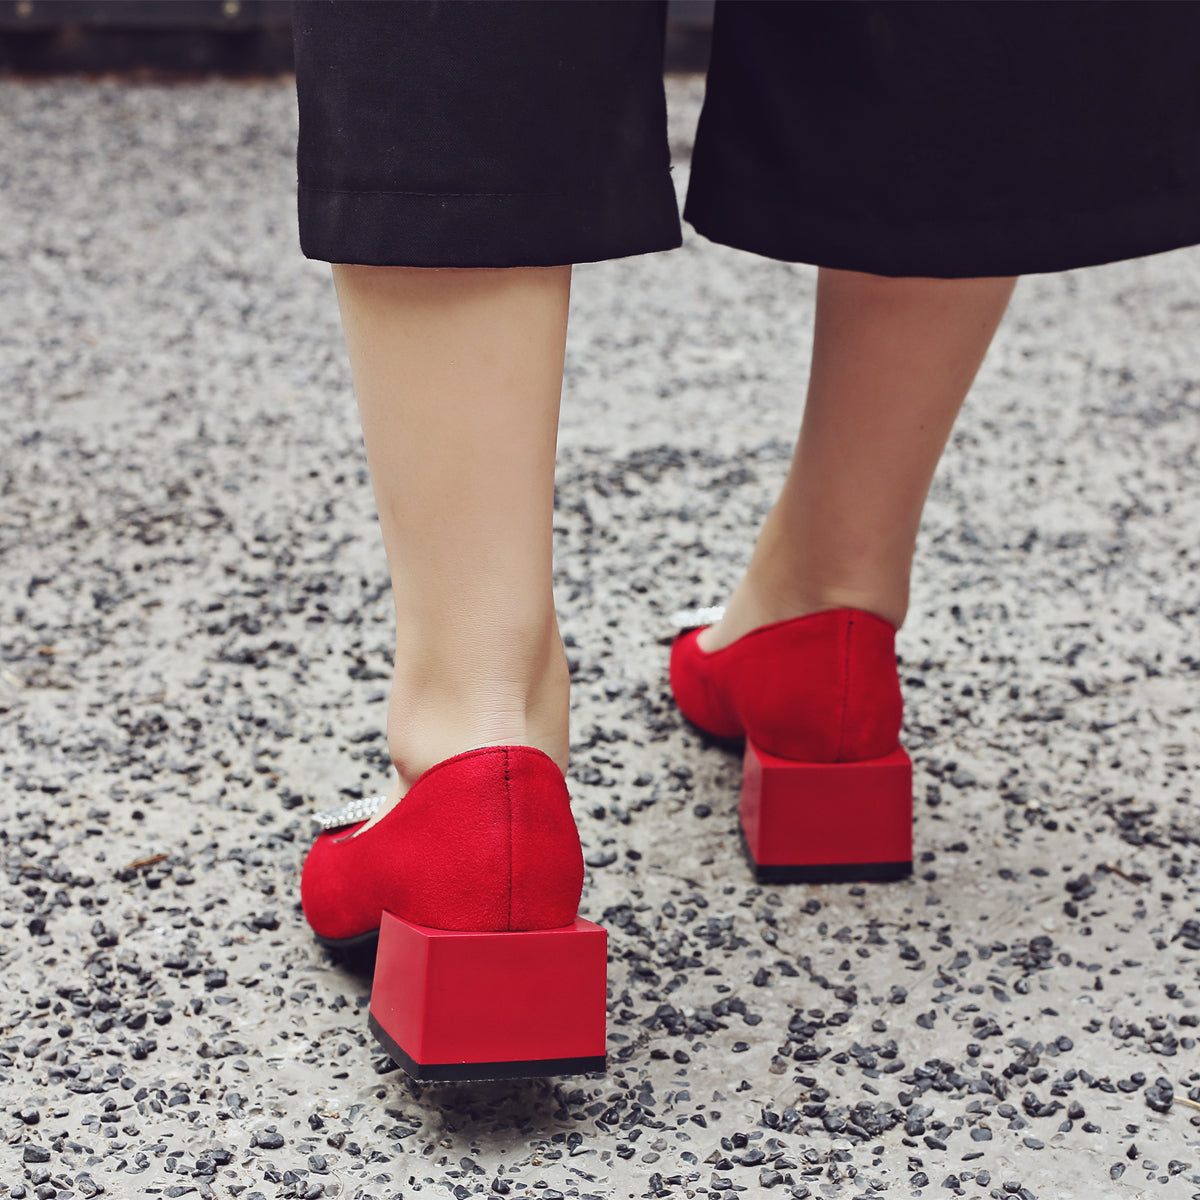 Bigsizeheels Women's square toe suede platform shoes - Red freeshipping - bigsizeheel®-size5-size15 -All Plus Sizes Available!